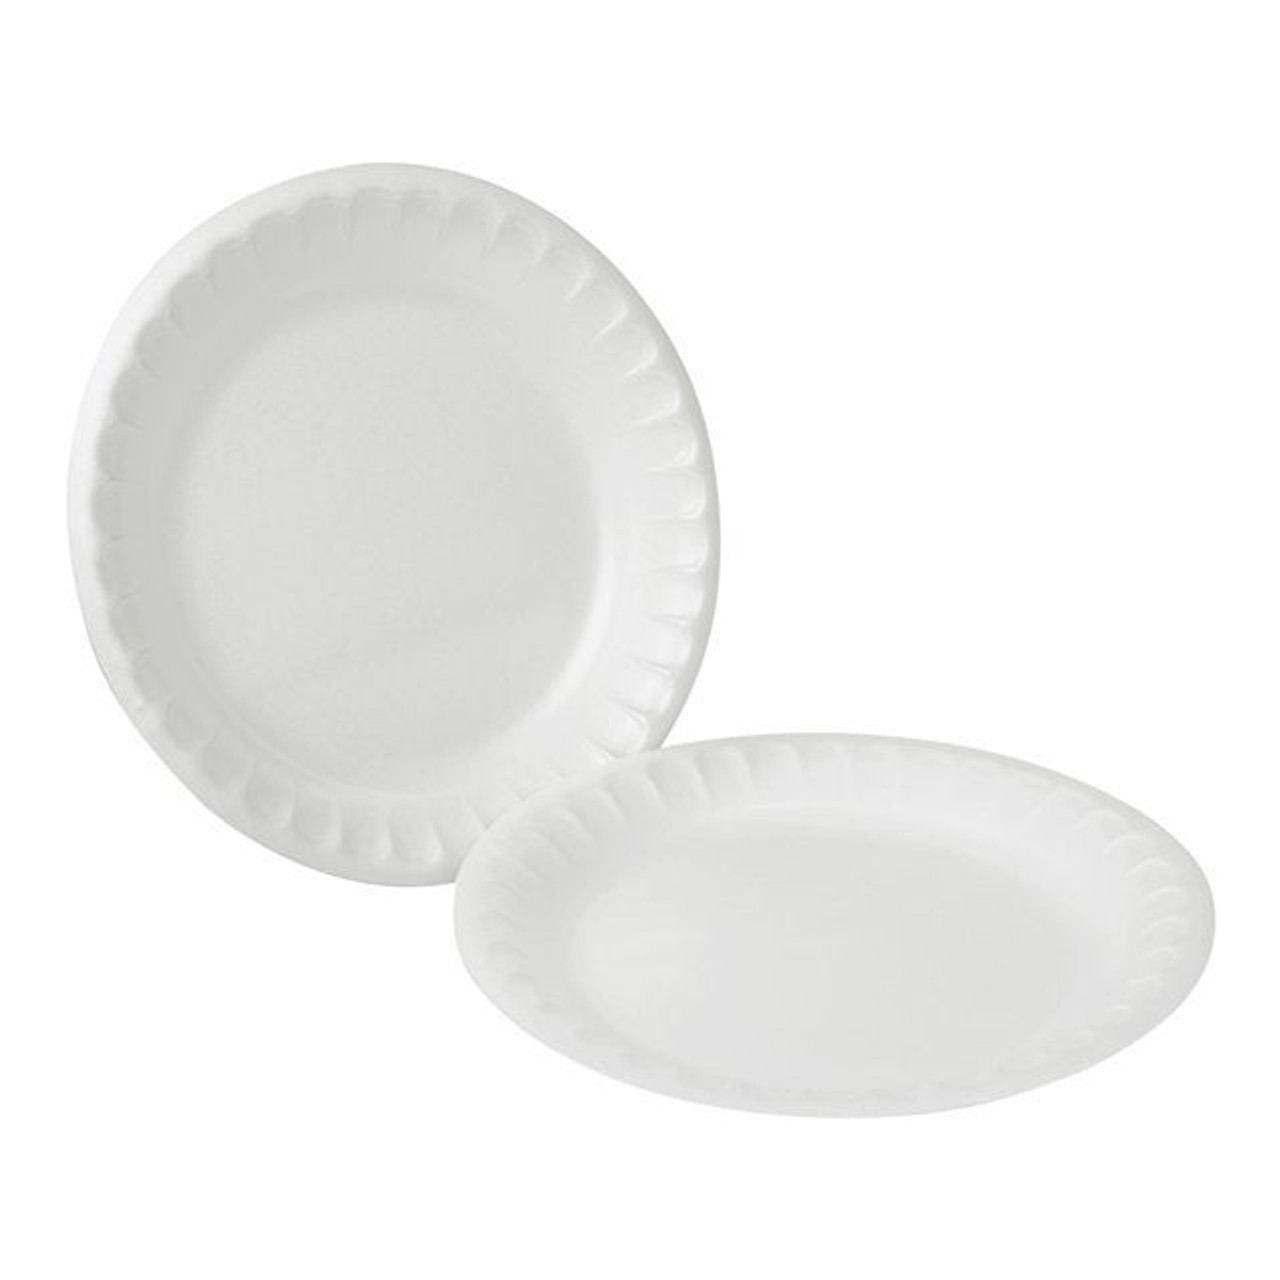 Gordon Choice 9in White Foam Plates, Satin | 500UN/Unit, 1 Unit/Case